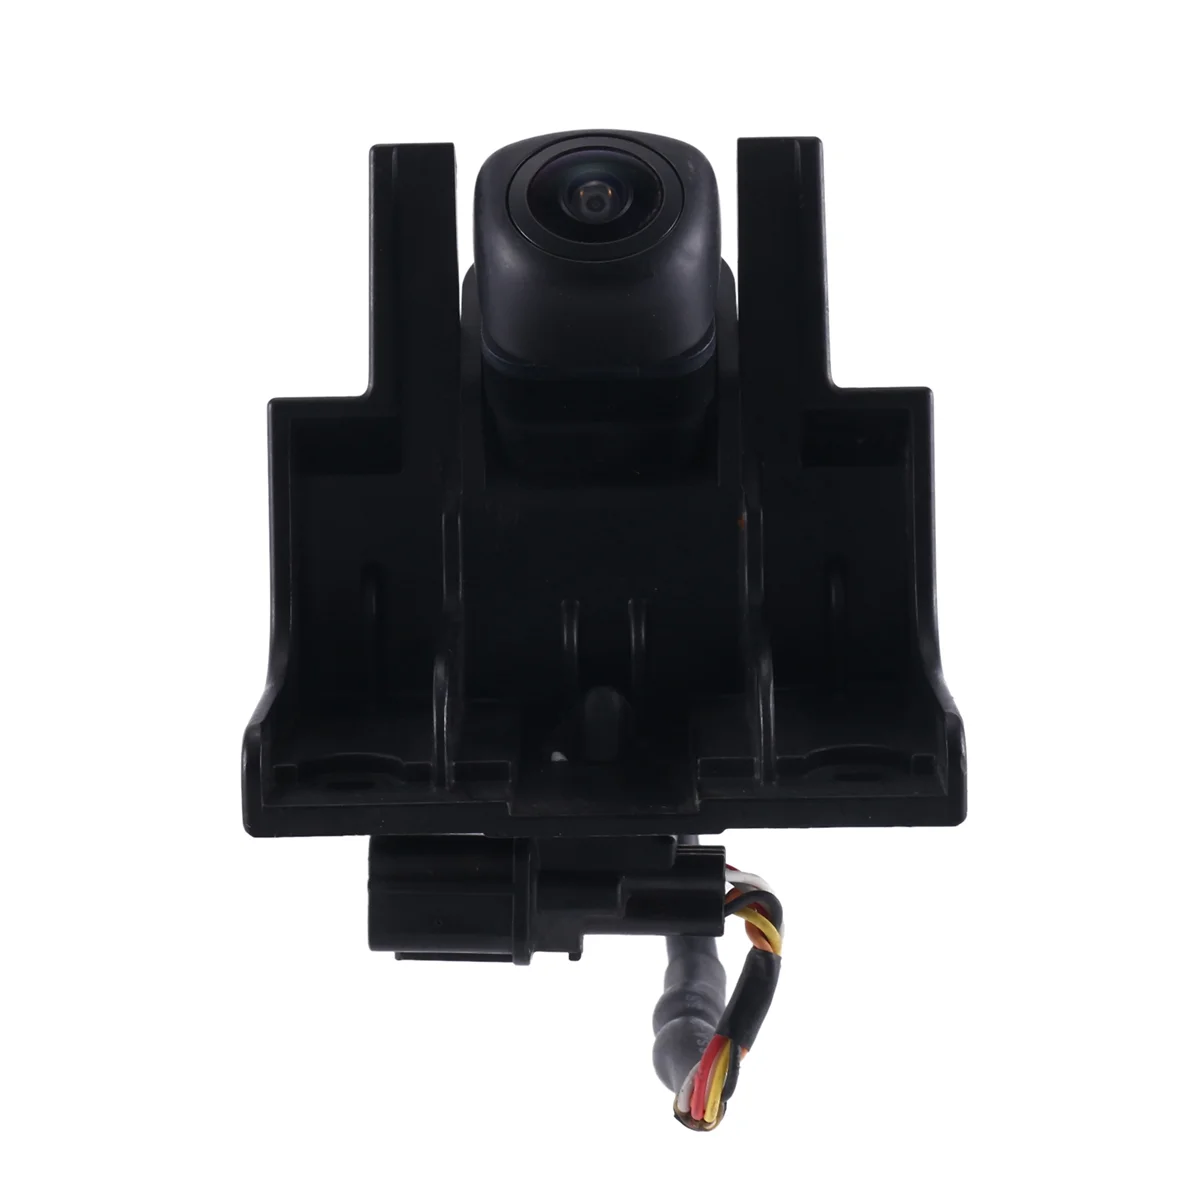 

95760-J3000 New Rear View Camera Reverse Camera Parking Assist Backup Camera for Hyundai Veloster 2019-2021